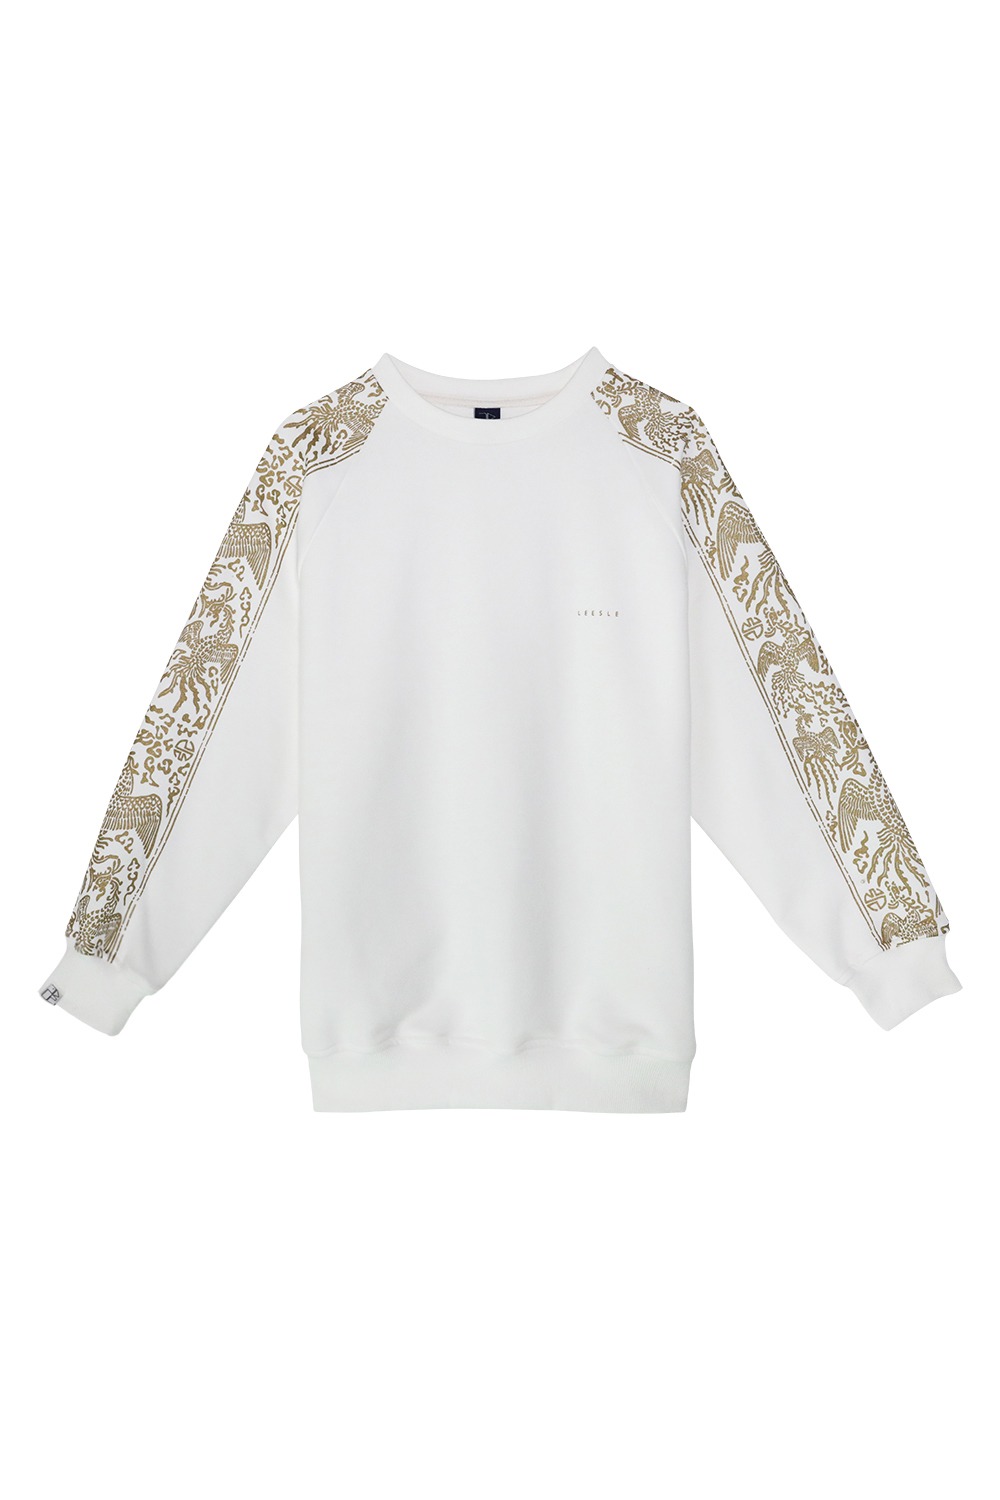 Royal Gilt Sweat Shirt [White]